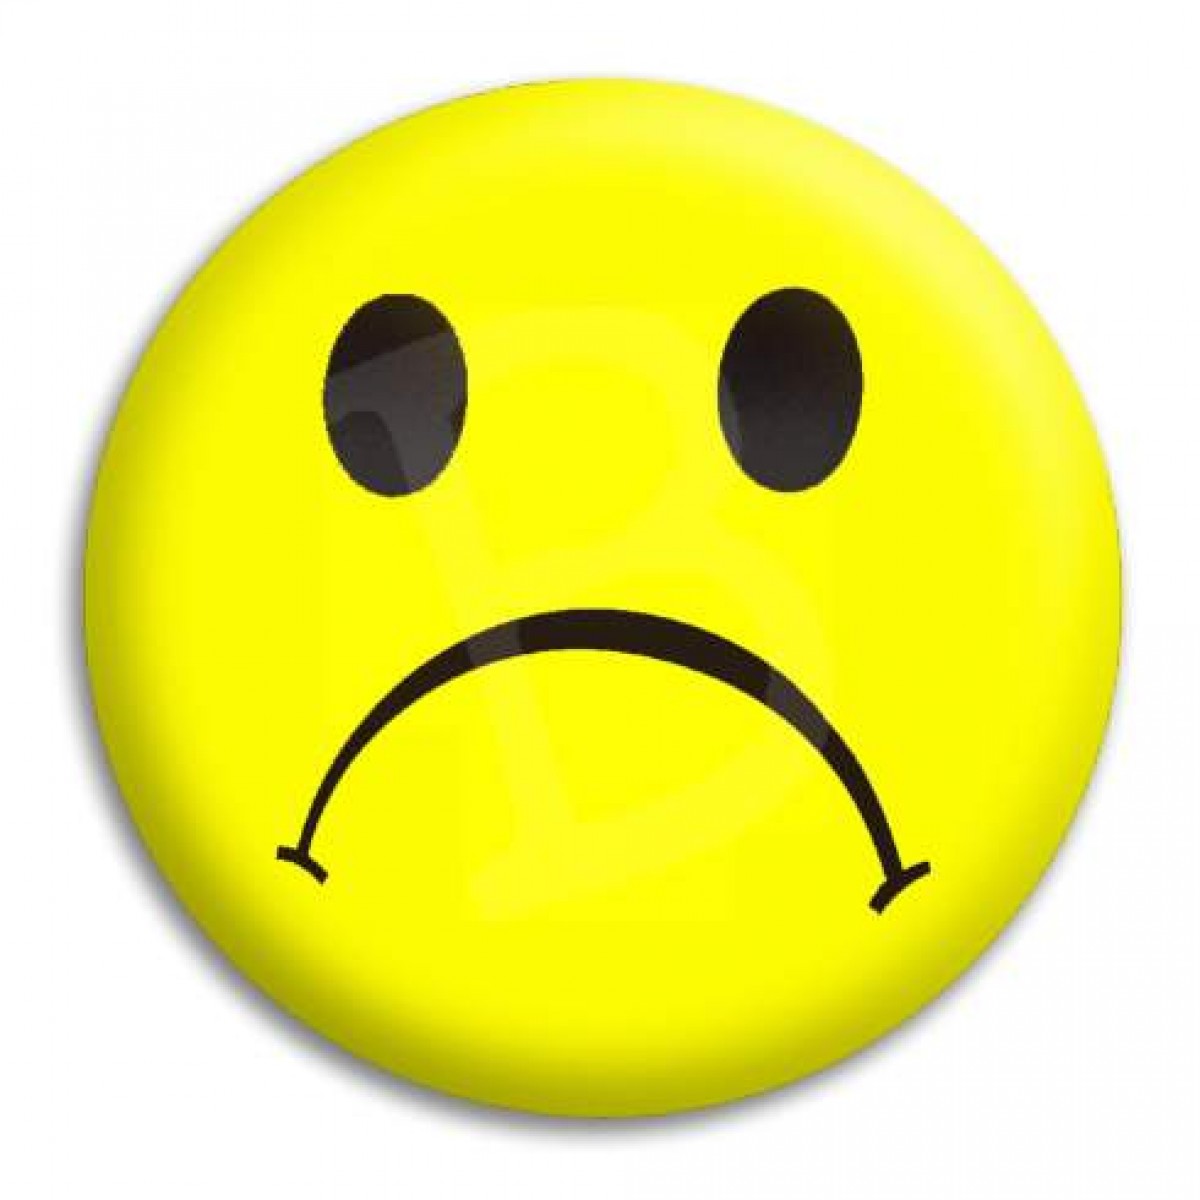 Free Sad Face Emoticon Download Free Sad Face Emoticon Png Images